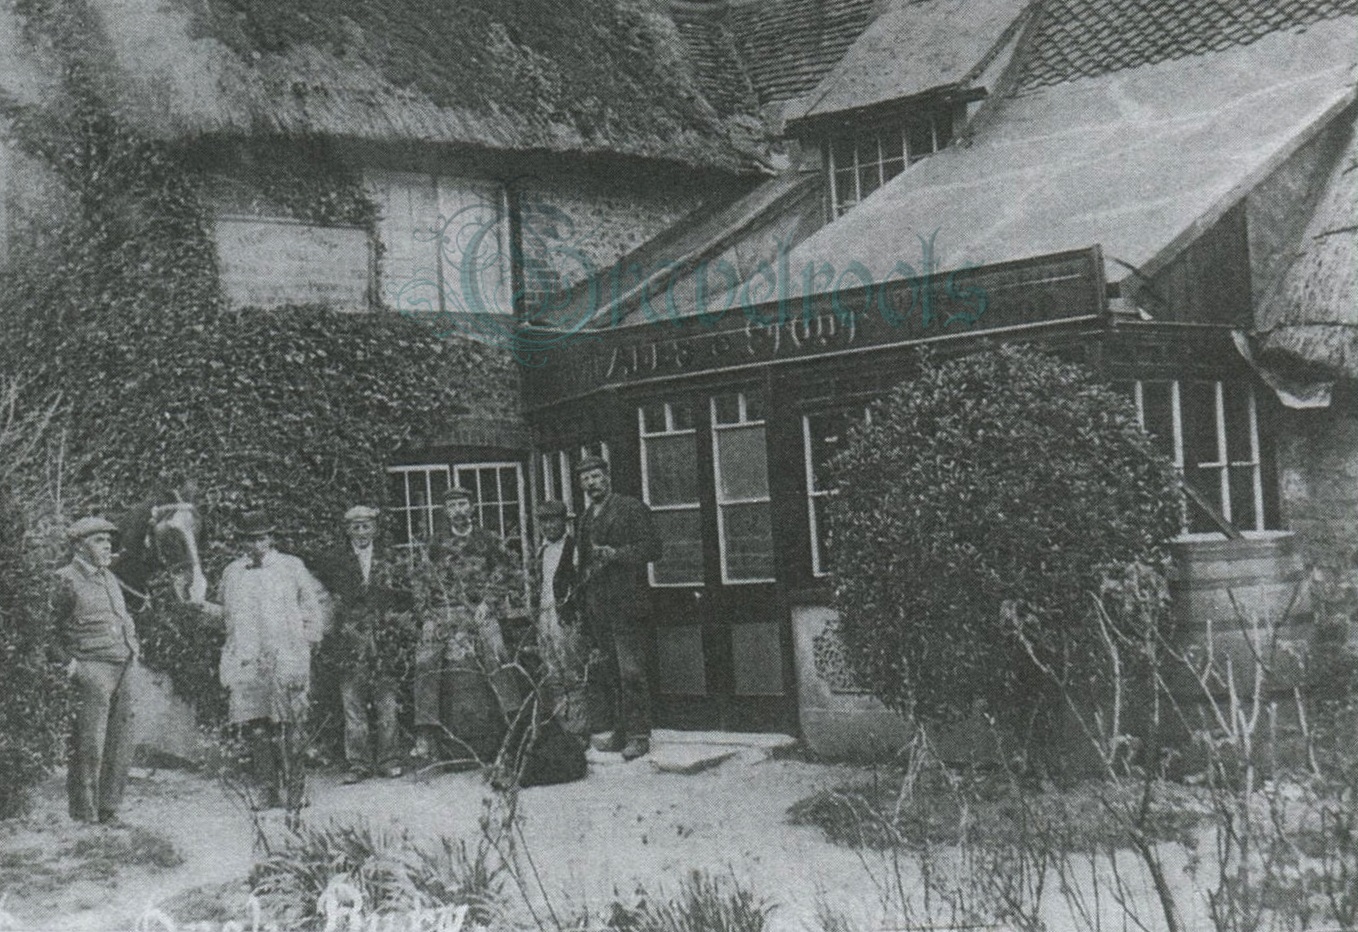  old photos of Black Dog & Duck Pub, Bury, Sussex - click image below to return